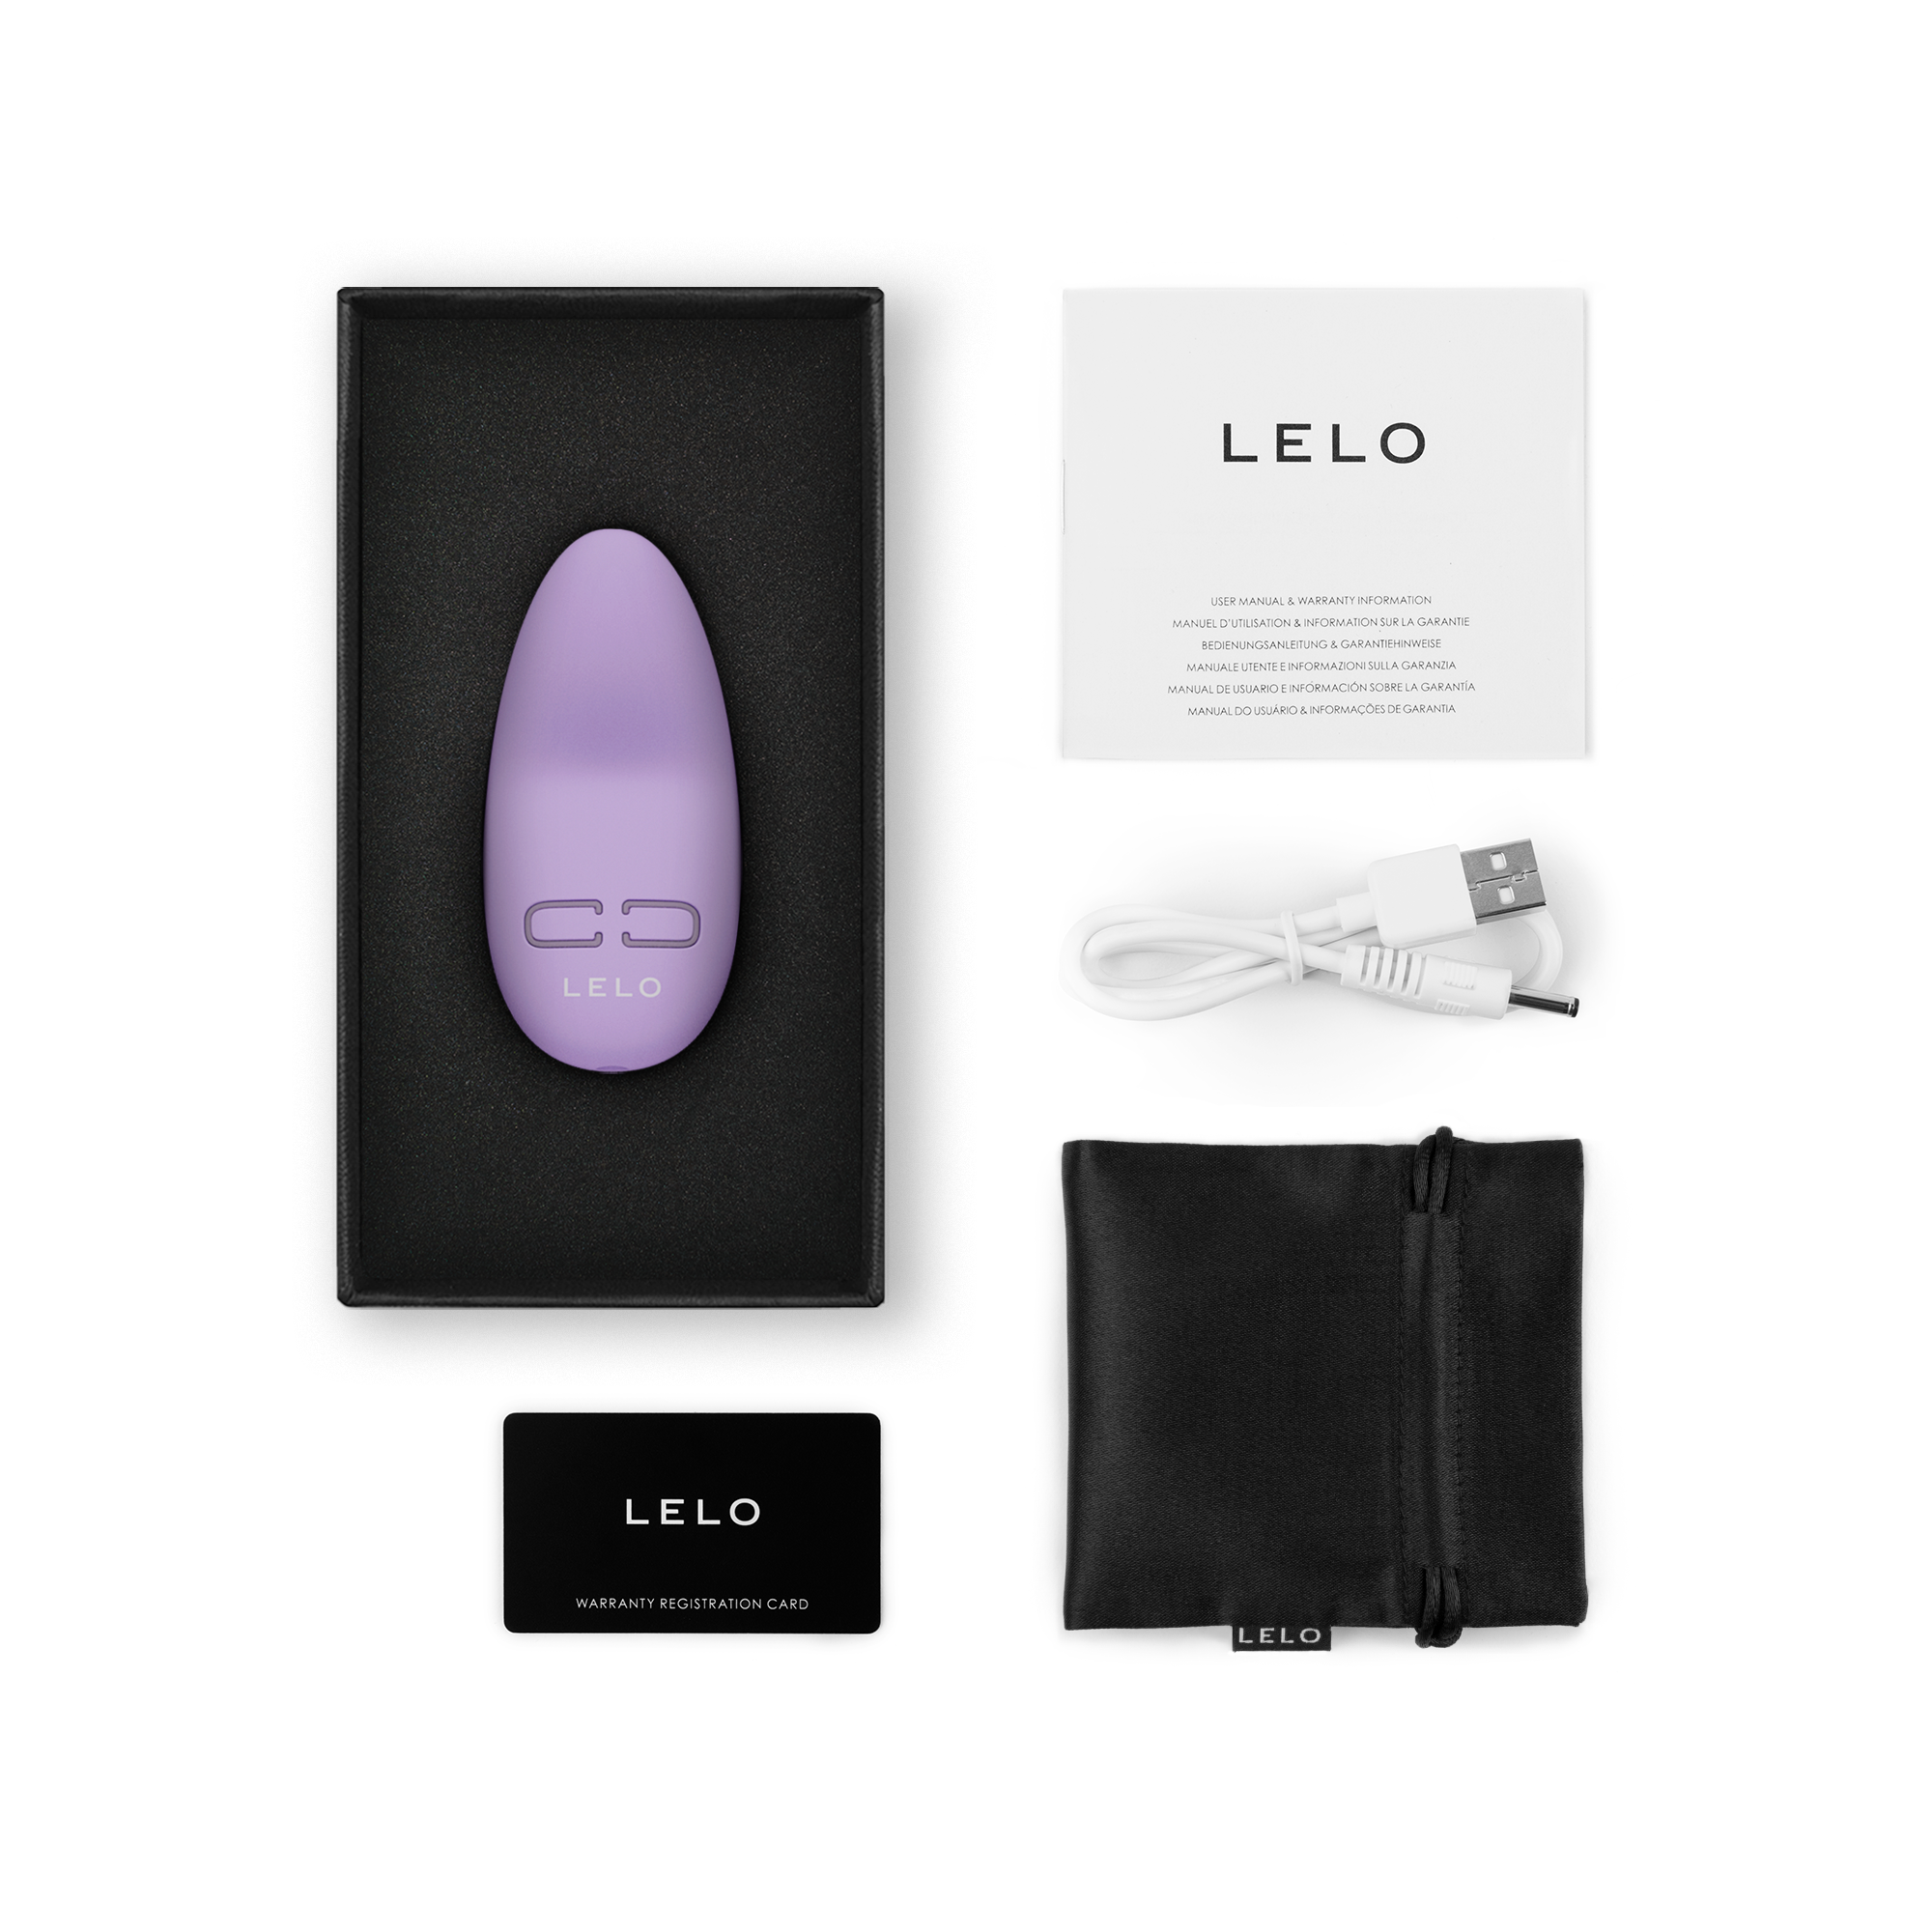 LELO LILY™ 3 Calm Lavender